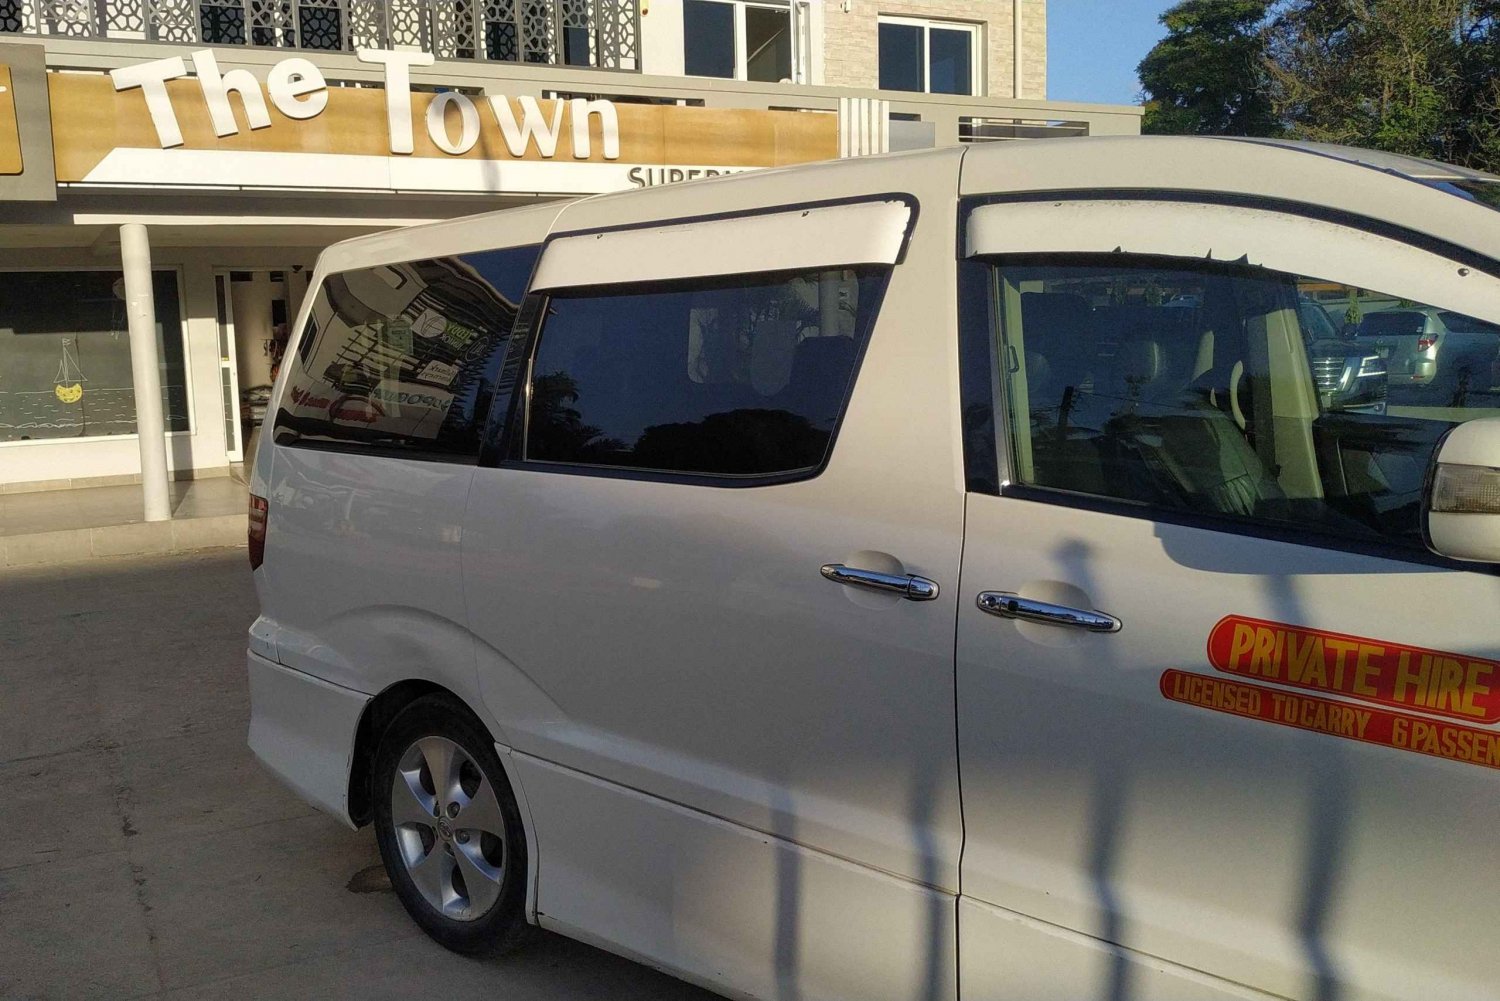 Zanzibar: Vliegveld Taxi Service naar Nungwi Hotels